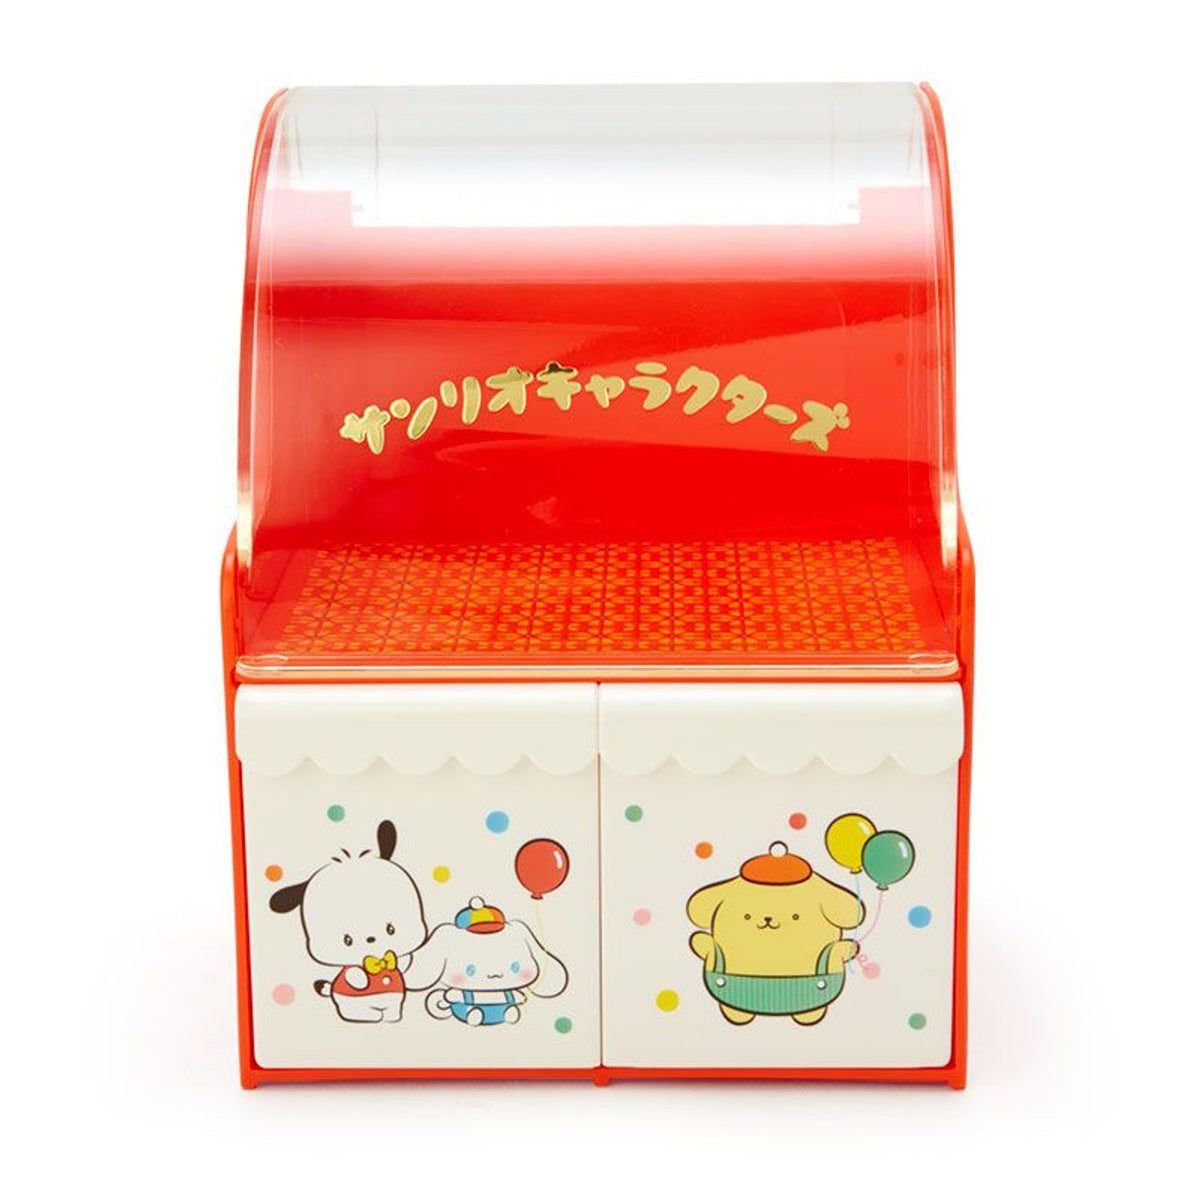 Sanrio Characters Mini Red Storage Chest (Retro Room Series) Home Goods Japan Original   